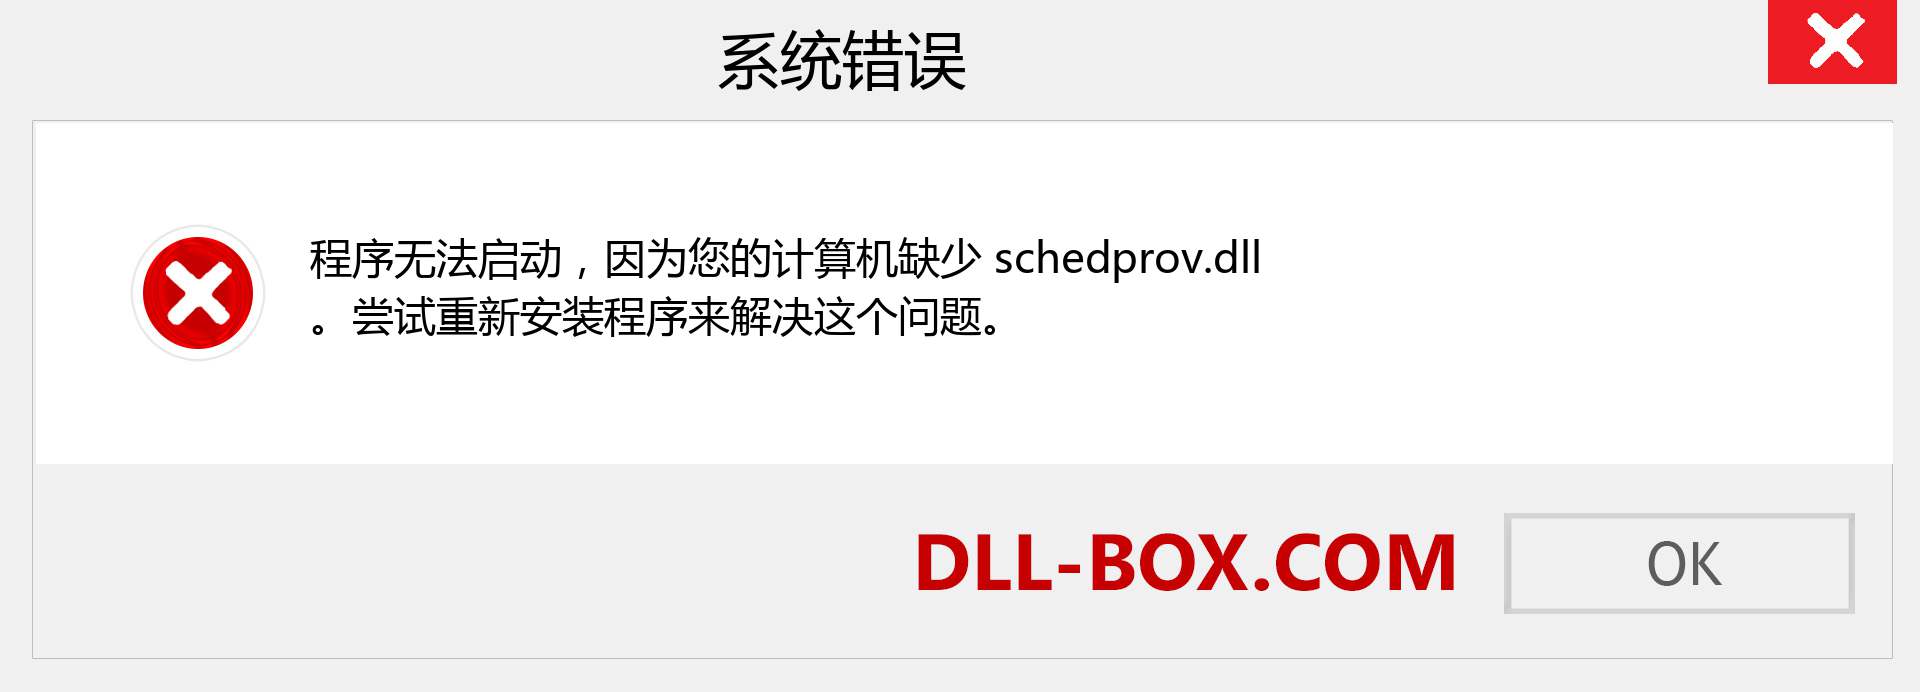 schedprov.dll 文件丢失？。 适用于 Windows 7、8、10 的下载 - 修复 Windows、照片、图像上的 schedprov dll 丢失错误